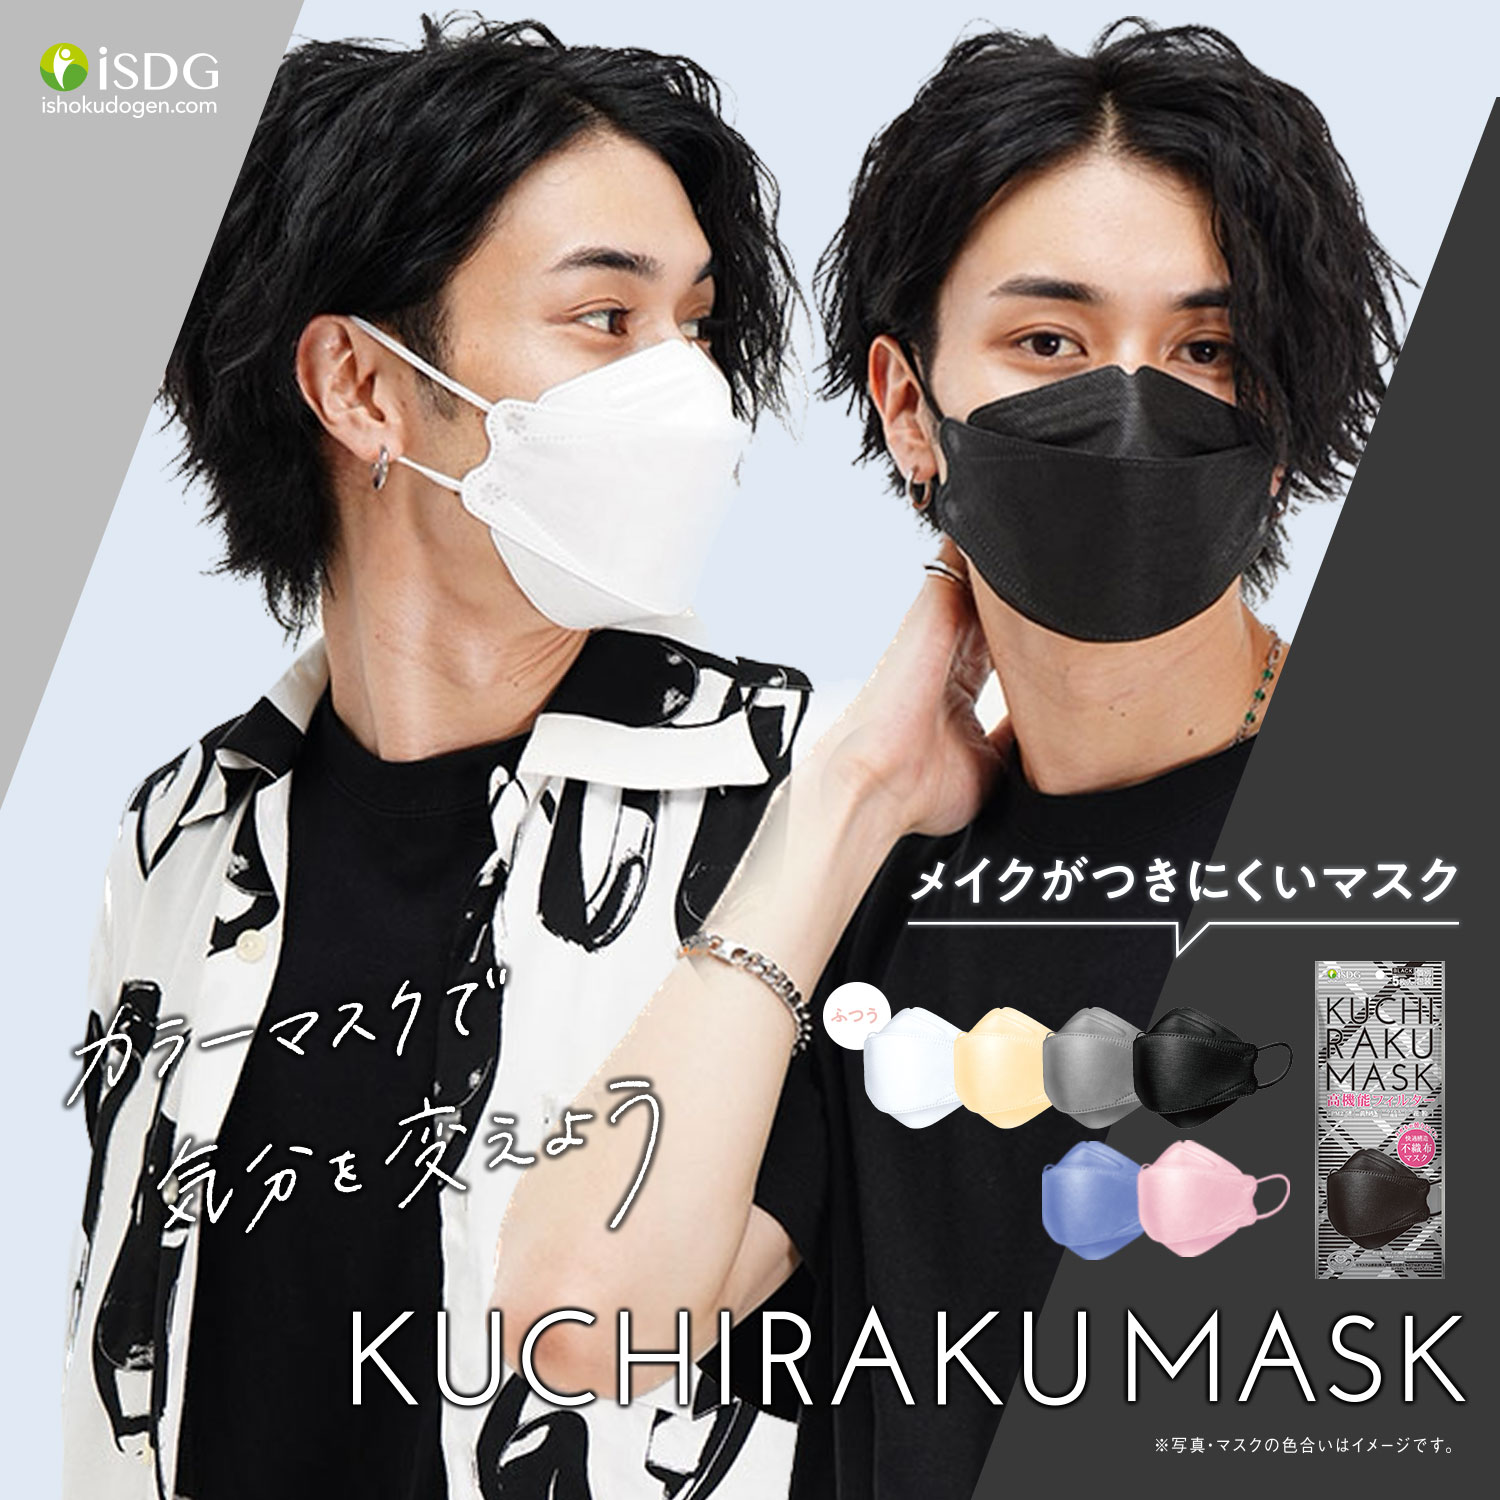 KUCHIRAKU MASK 5枚入 くちばし型マスク クチラクマスク クチバシマスク 不織布マスク マスク 個包装 ホワイト グレー ブラック  ピンク ベージュ パープル